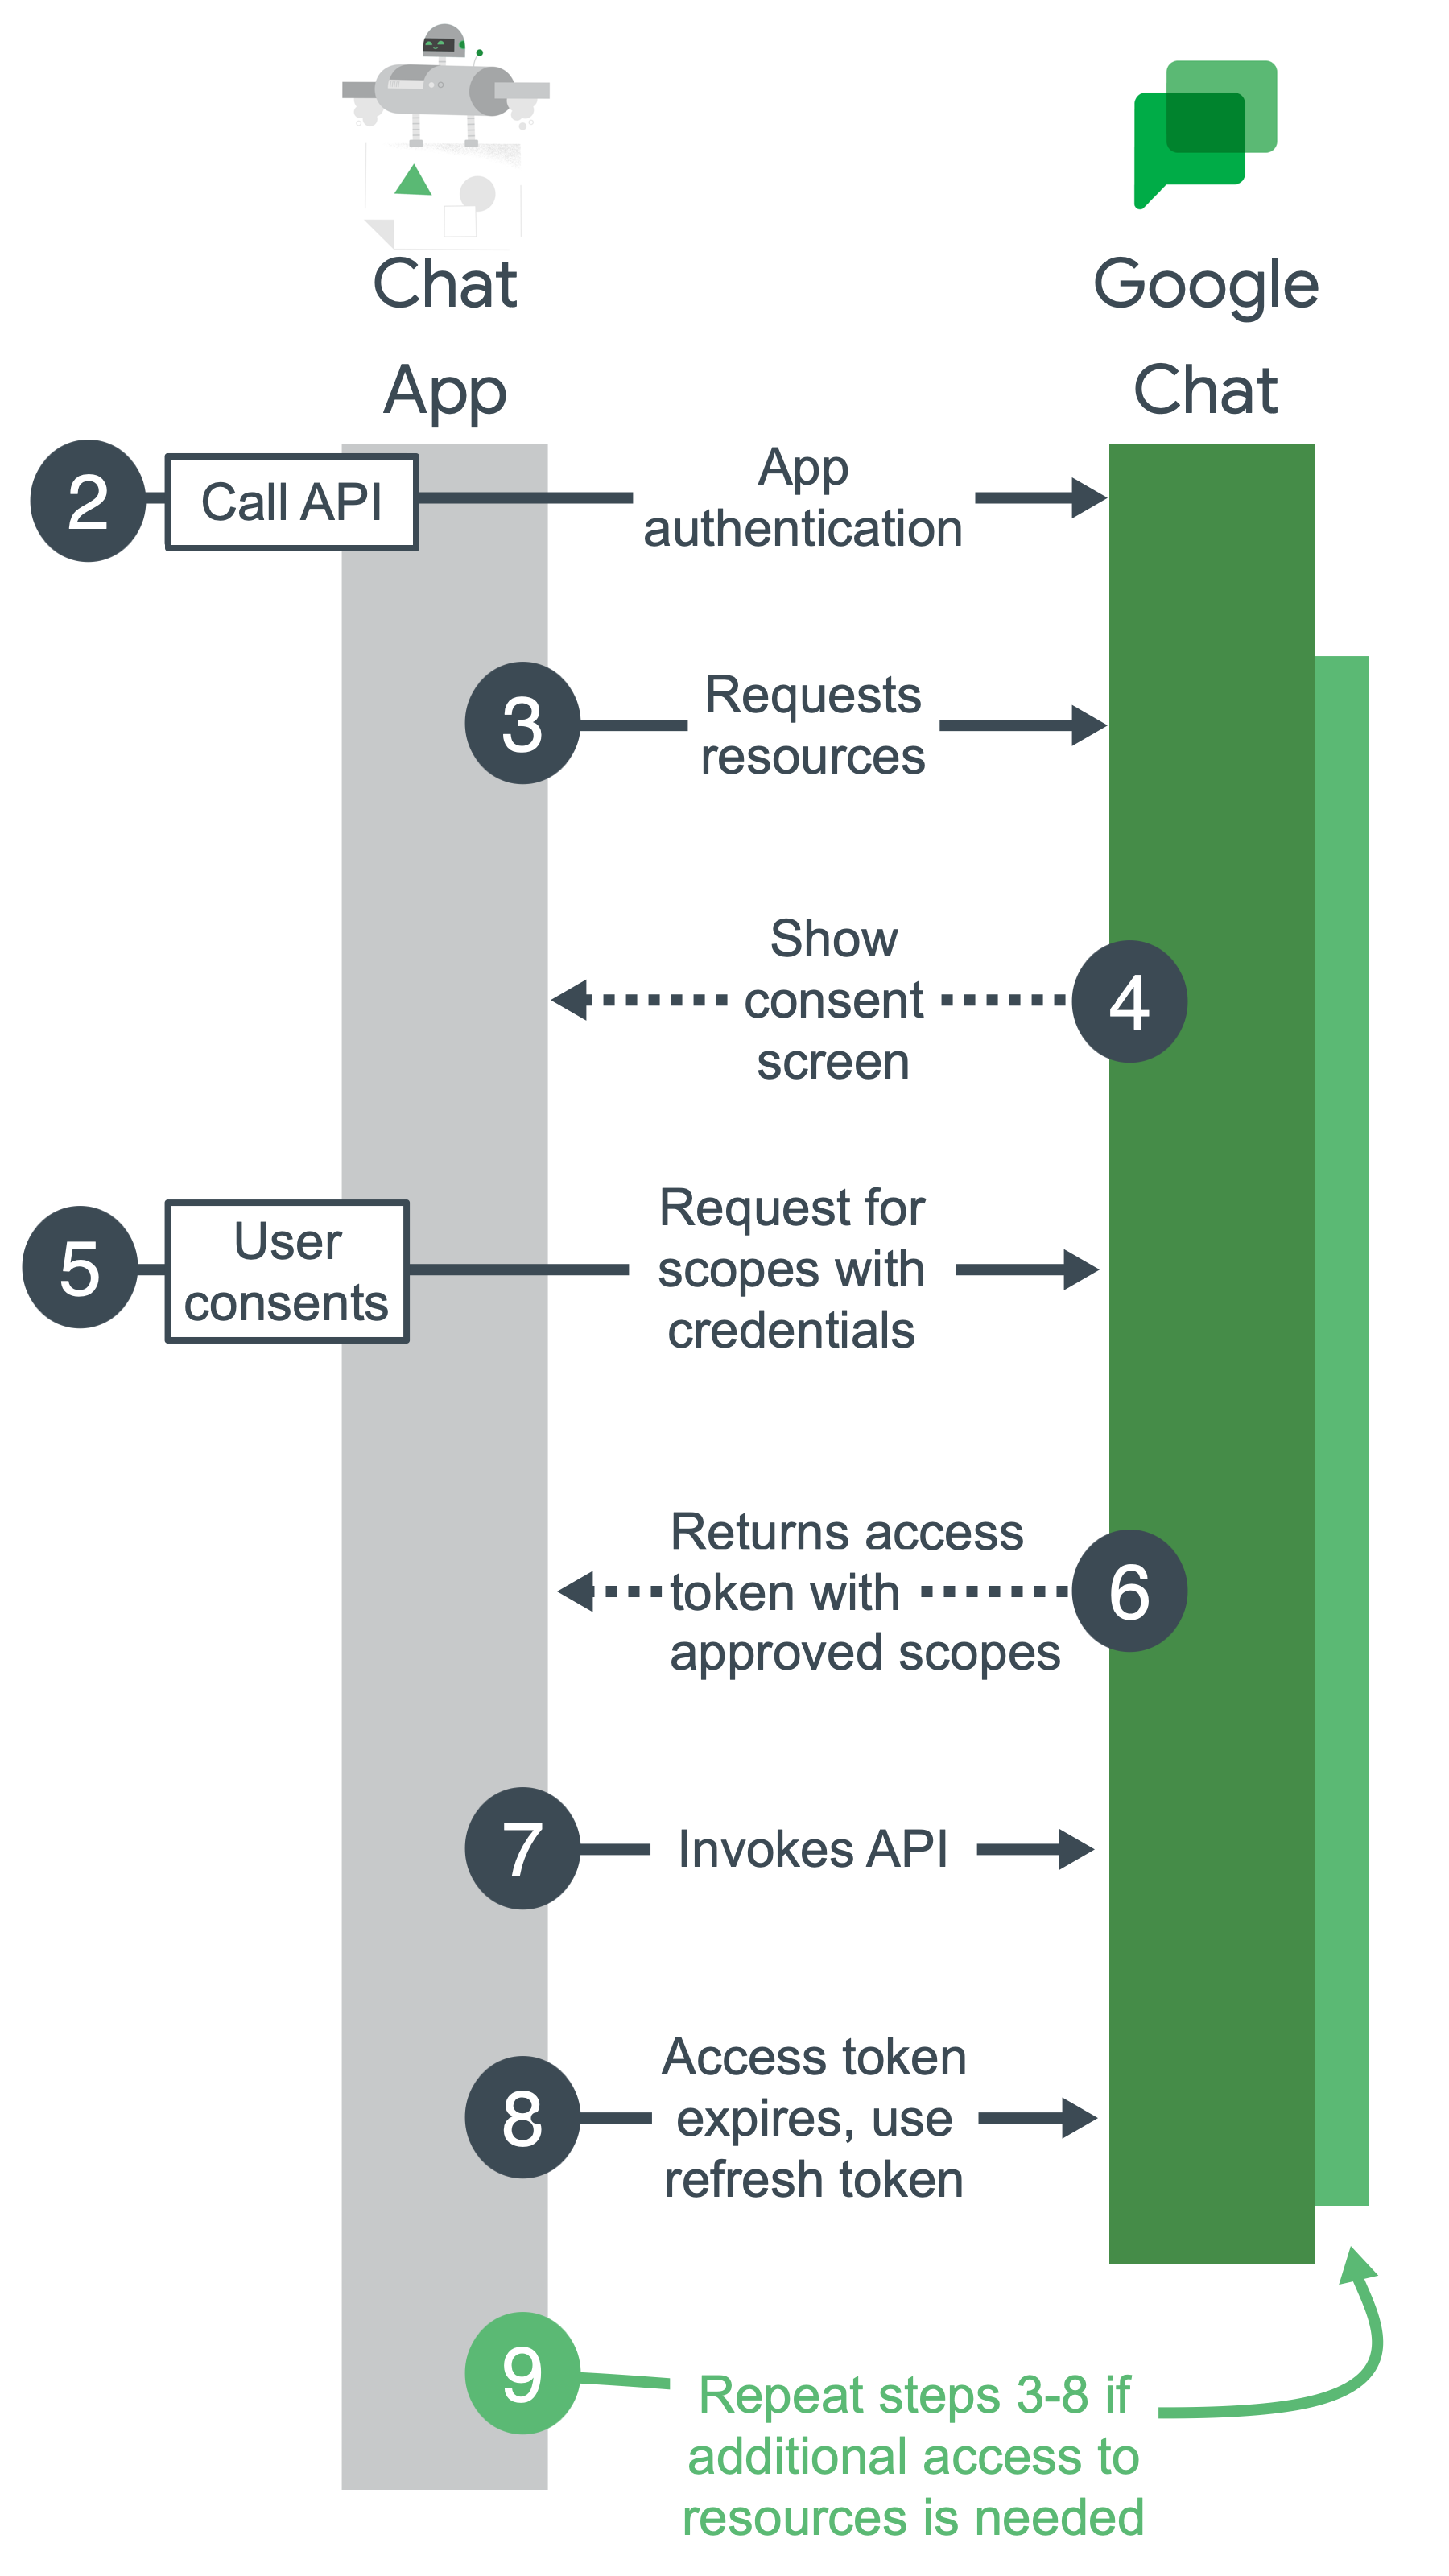 Google Chat 身份验证和授权的概要步骤